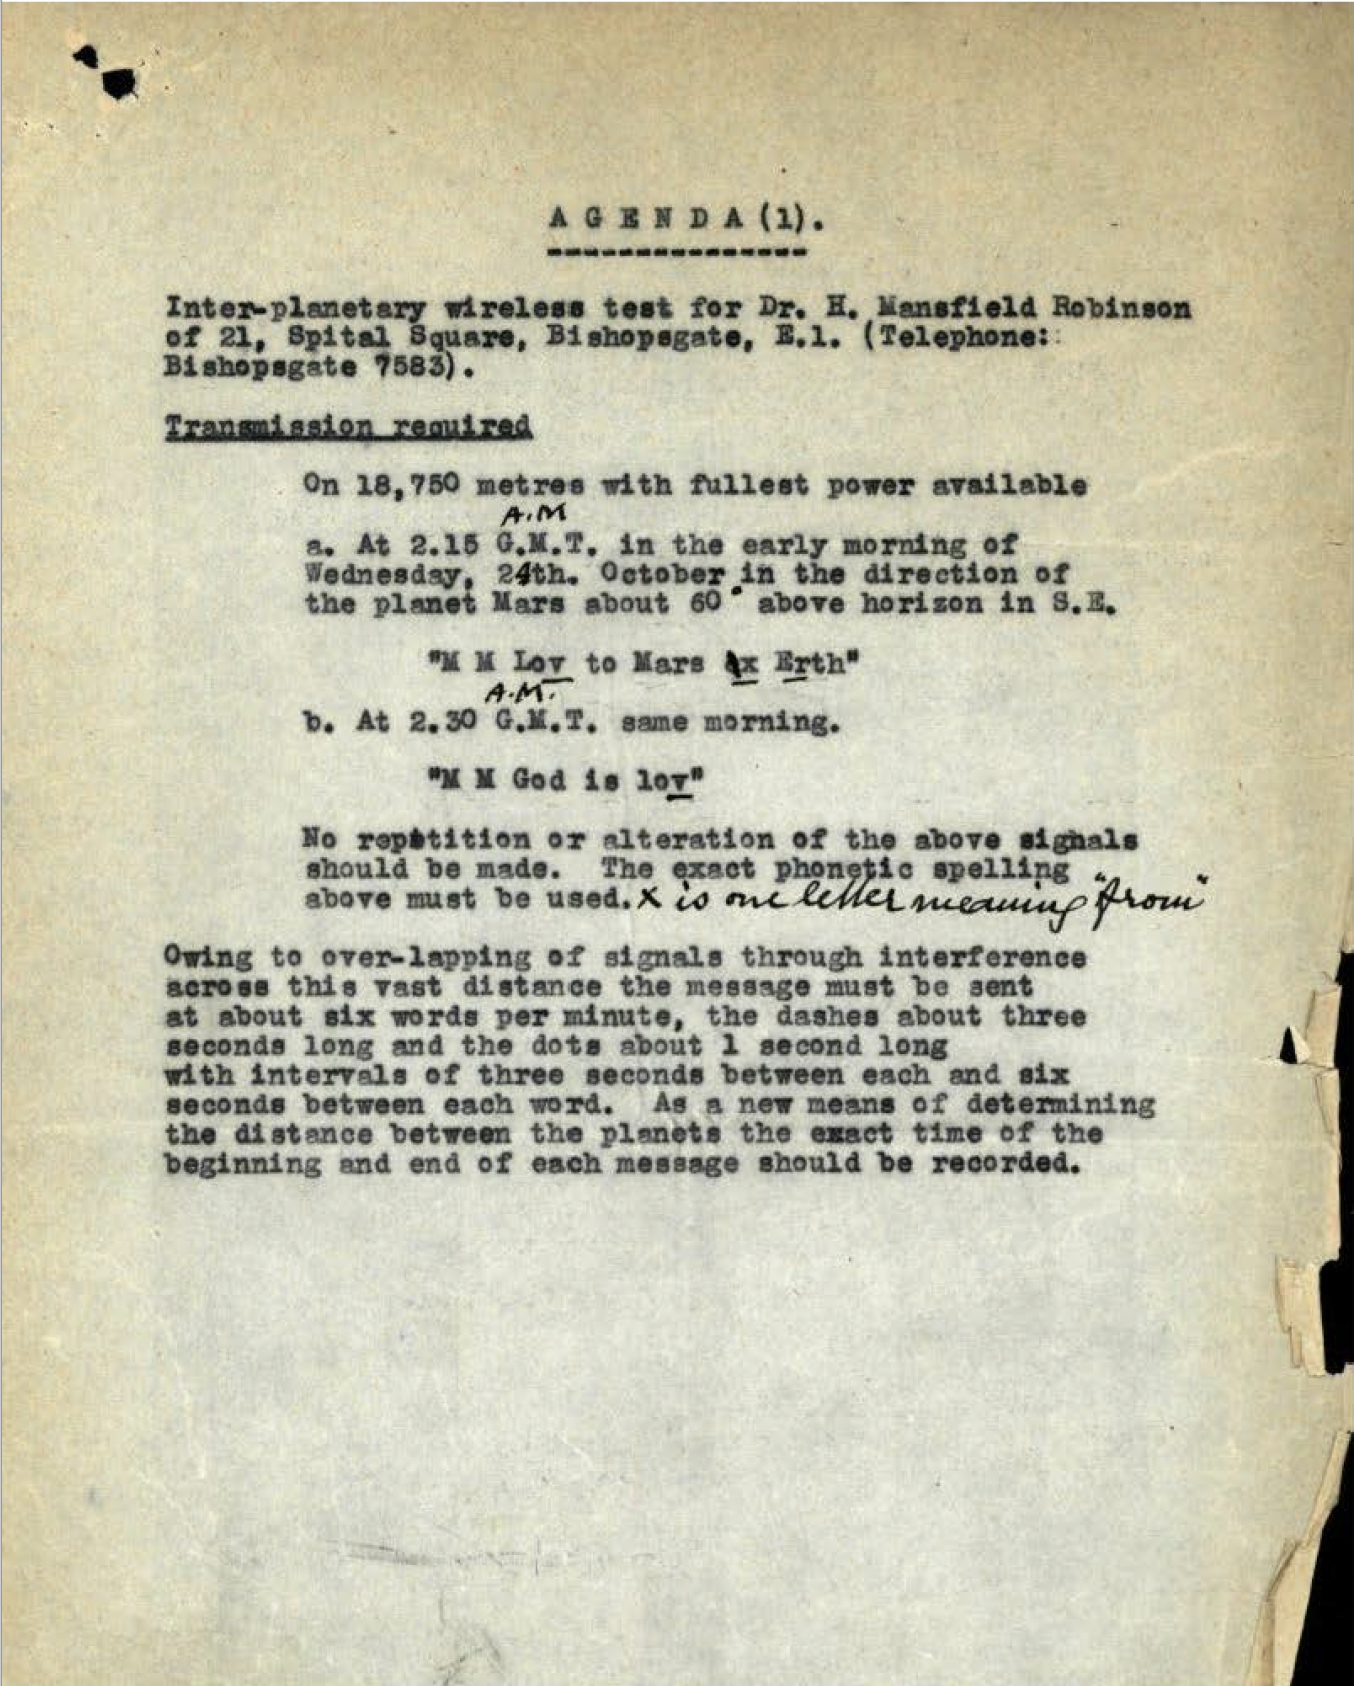 1928 transmission agenda. Courtesy of BT Heritage & Archives.